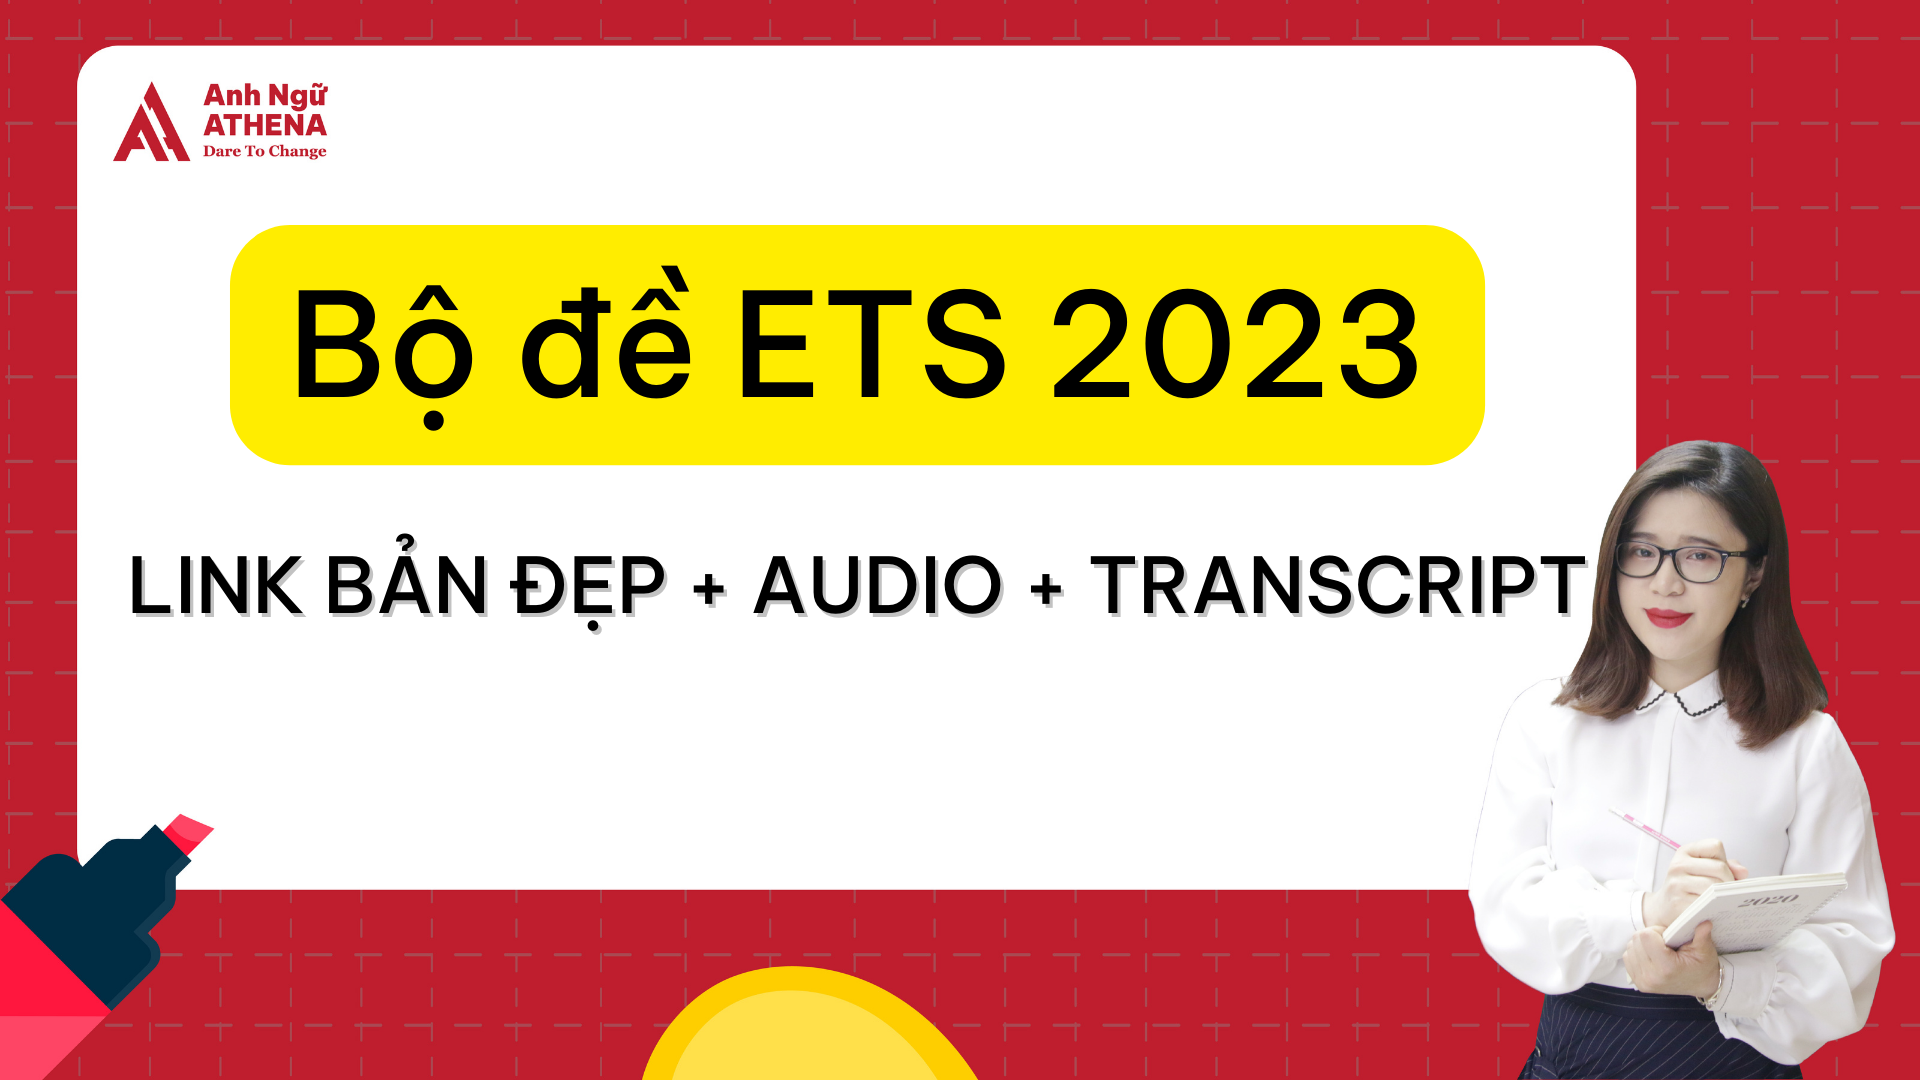 ETS 2023: Download FULL bộ đề mới nhất (kèm audio, transcript) 